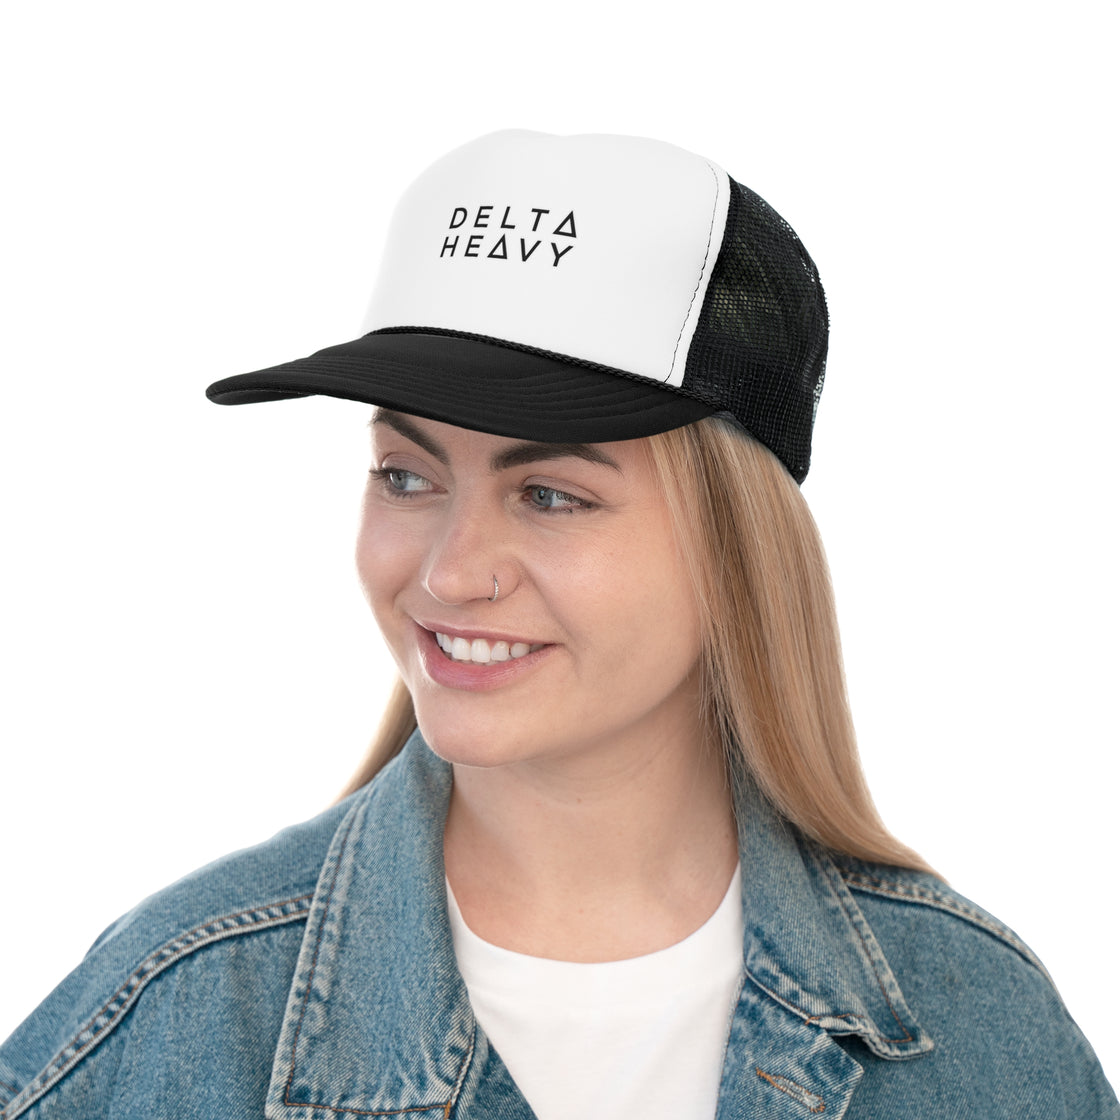 Delta Heavy Trucker Hat